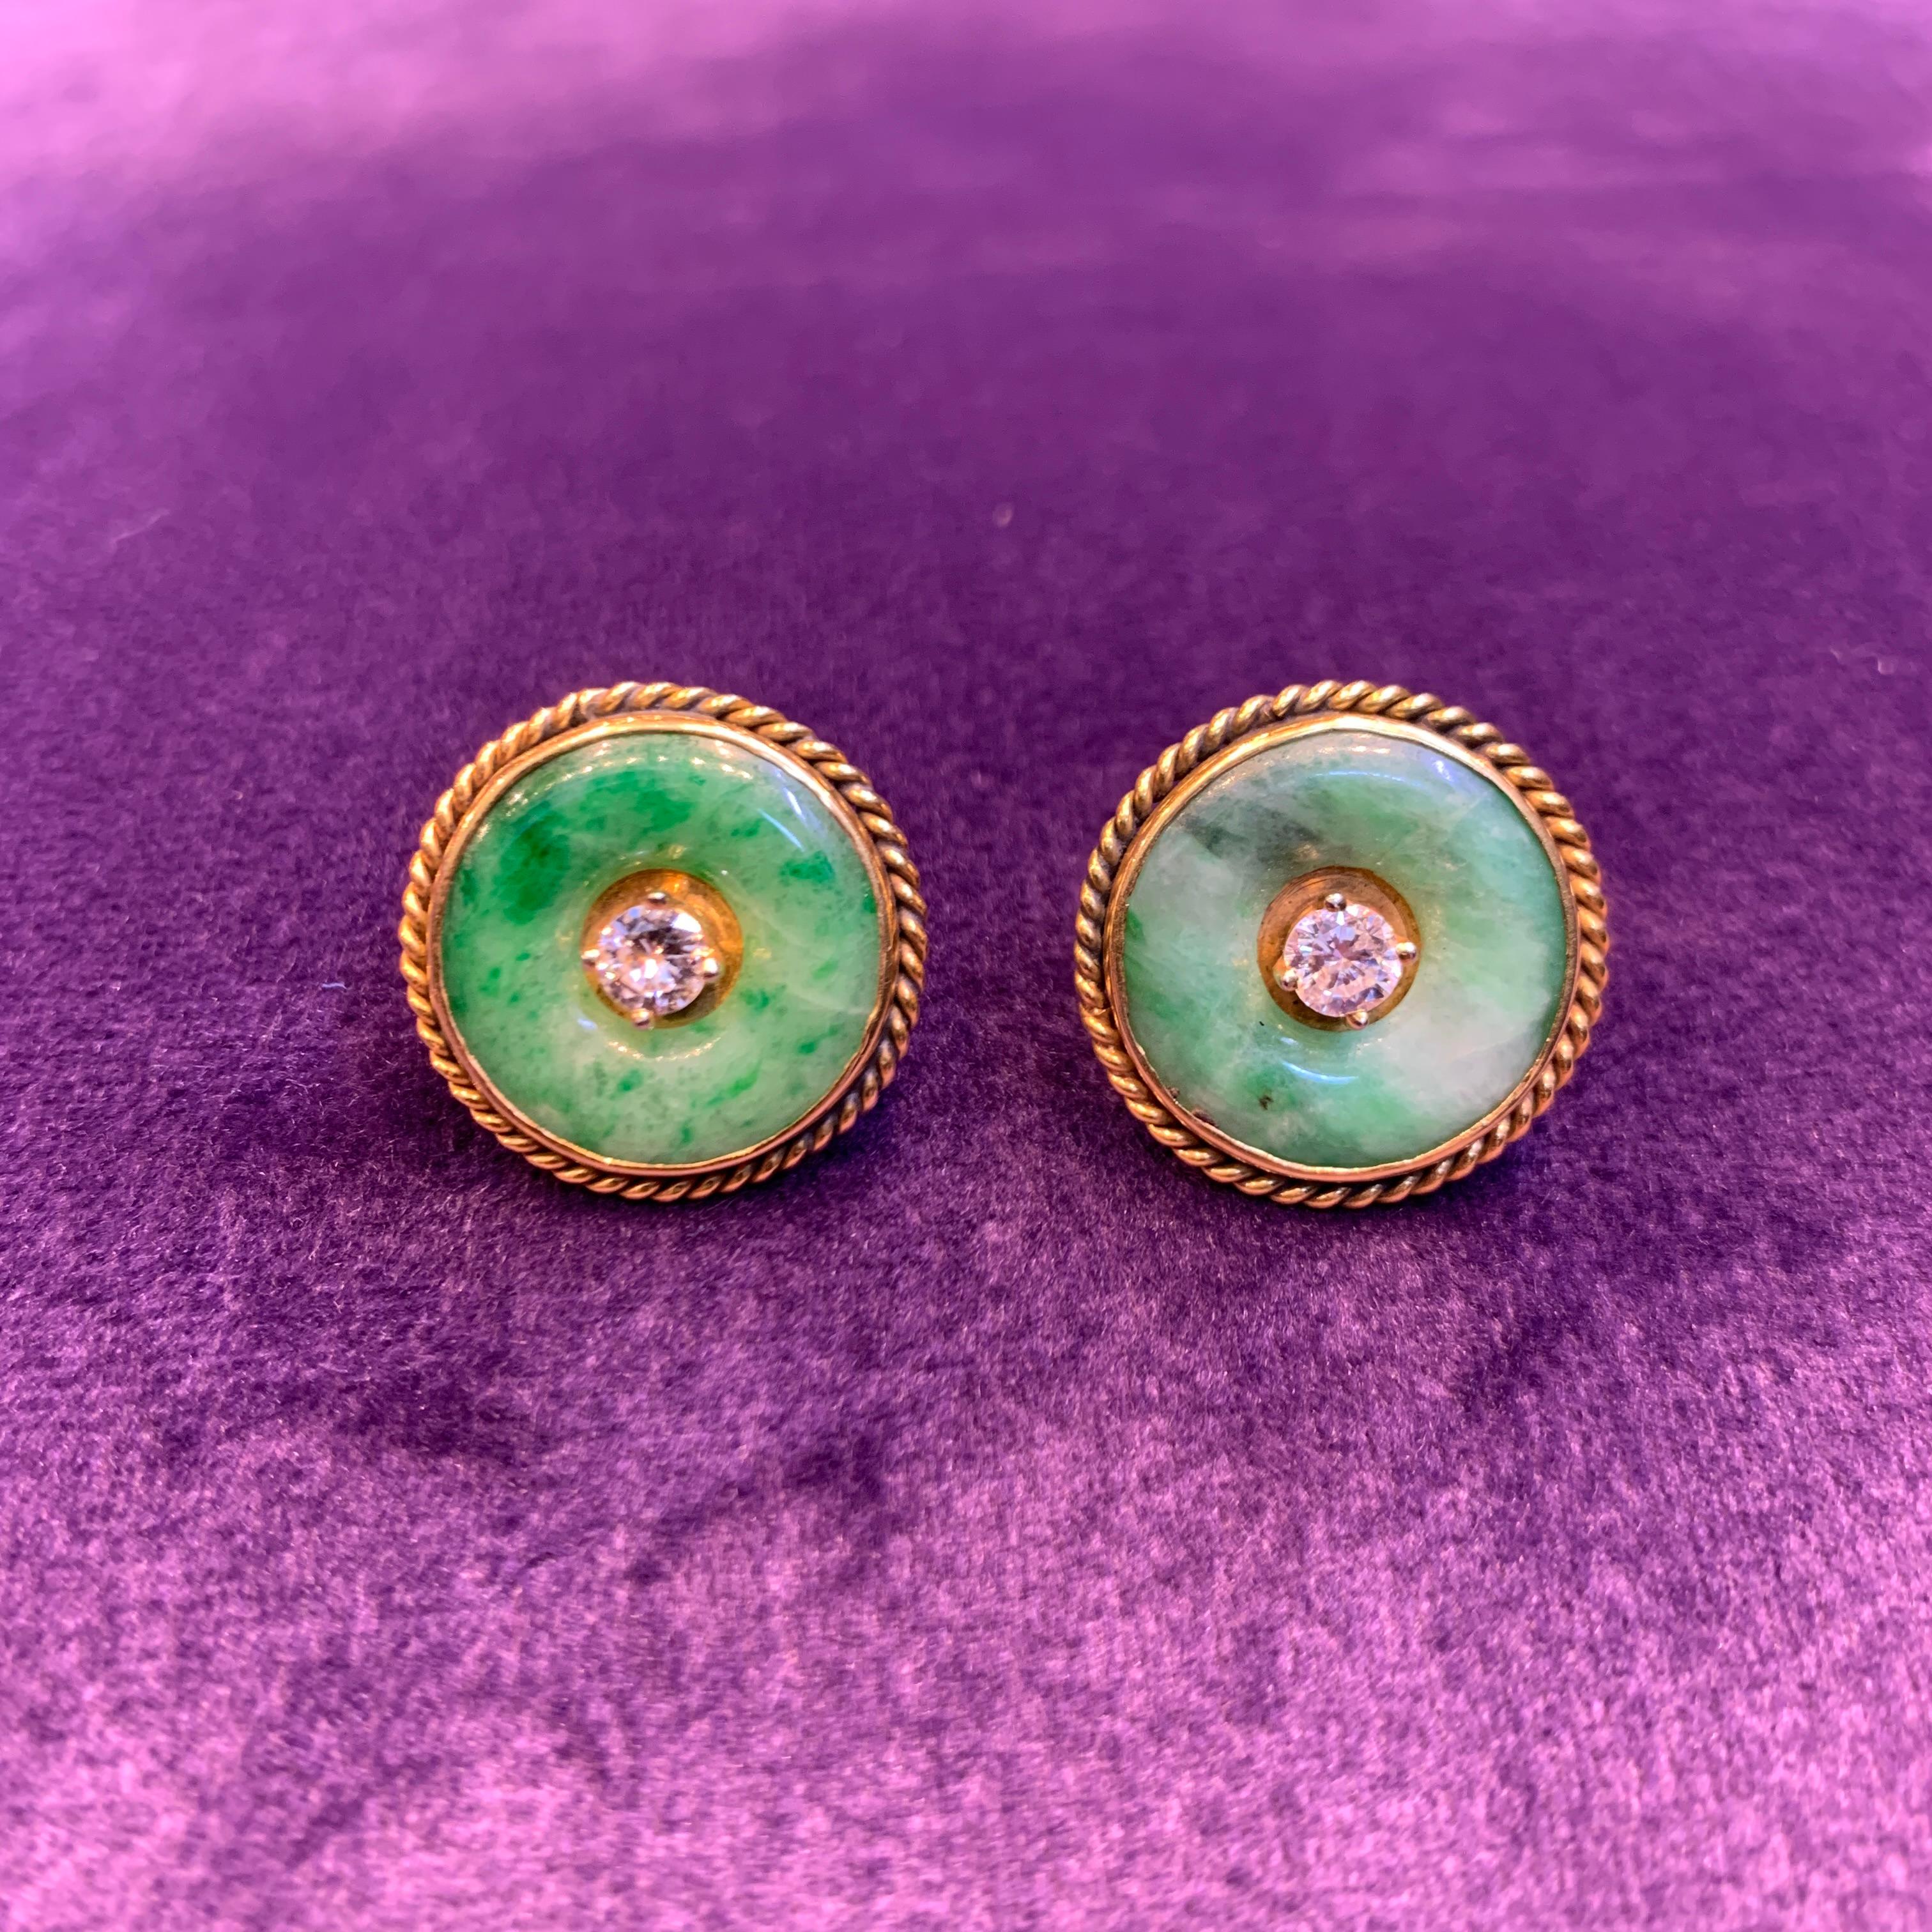 jade earrings with diamonds